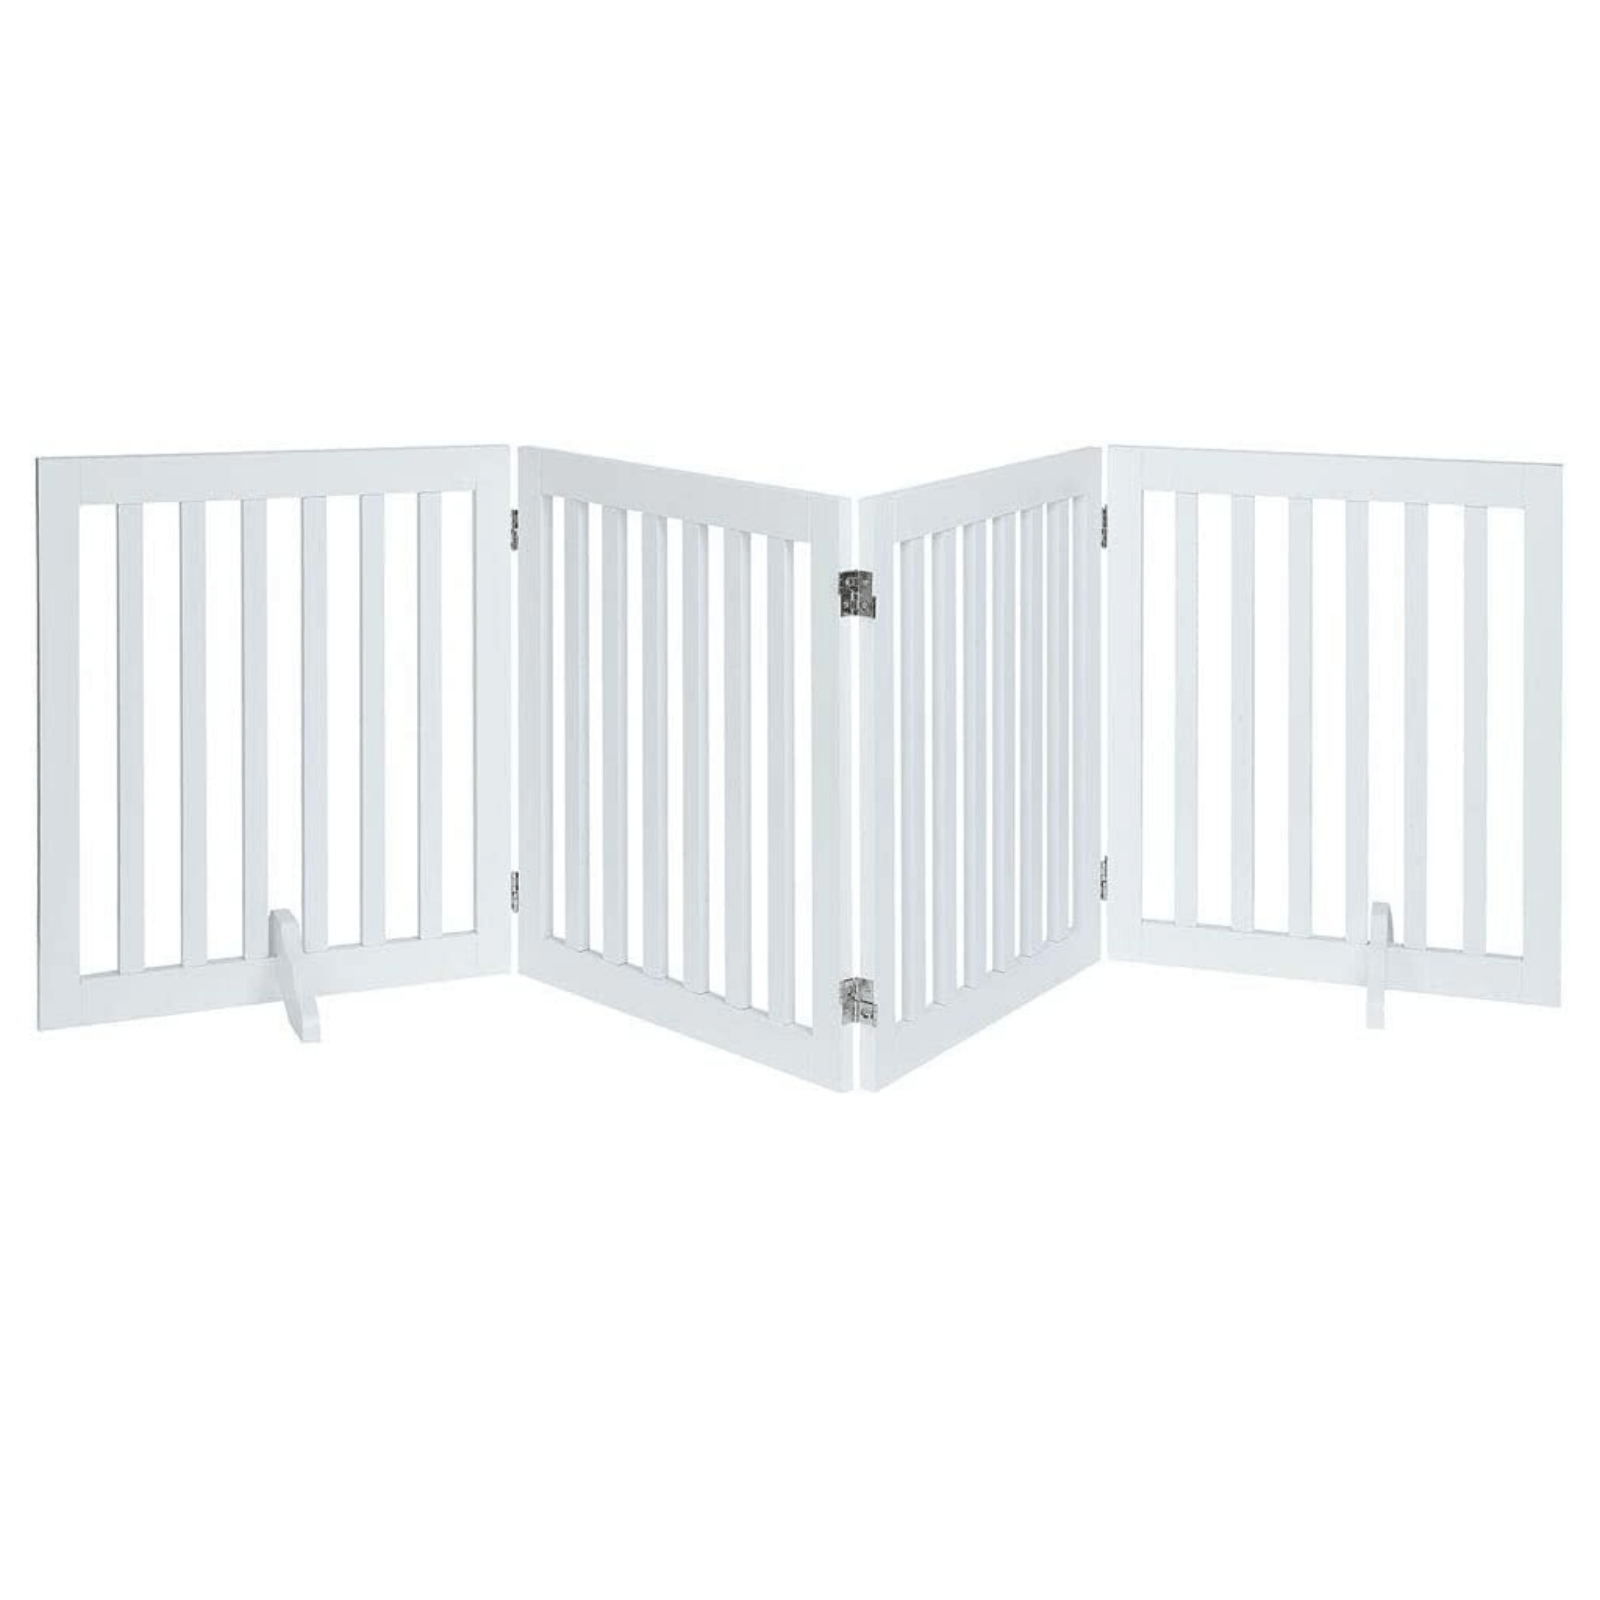 Four Panel Freestanding Dog Gate, White